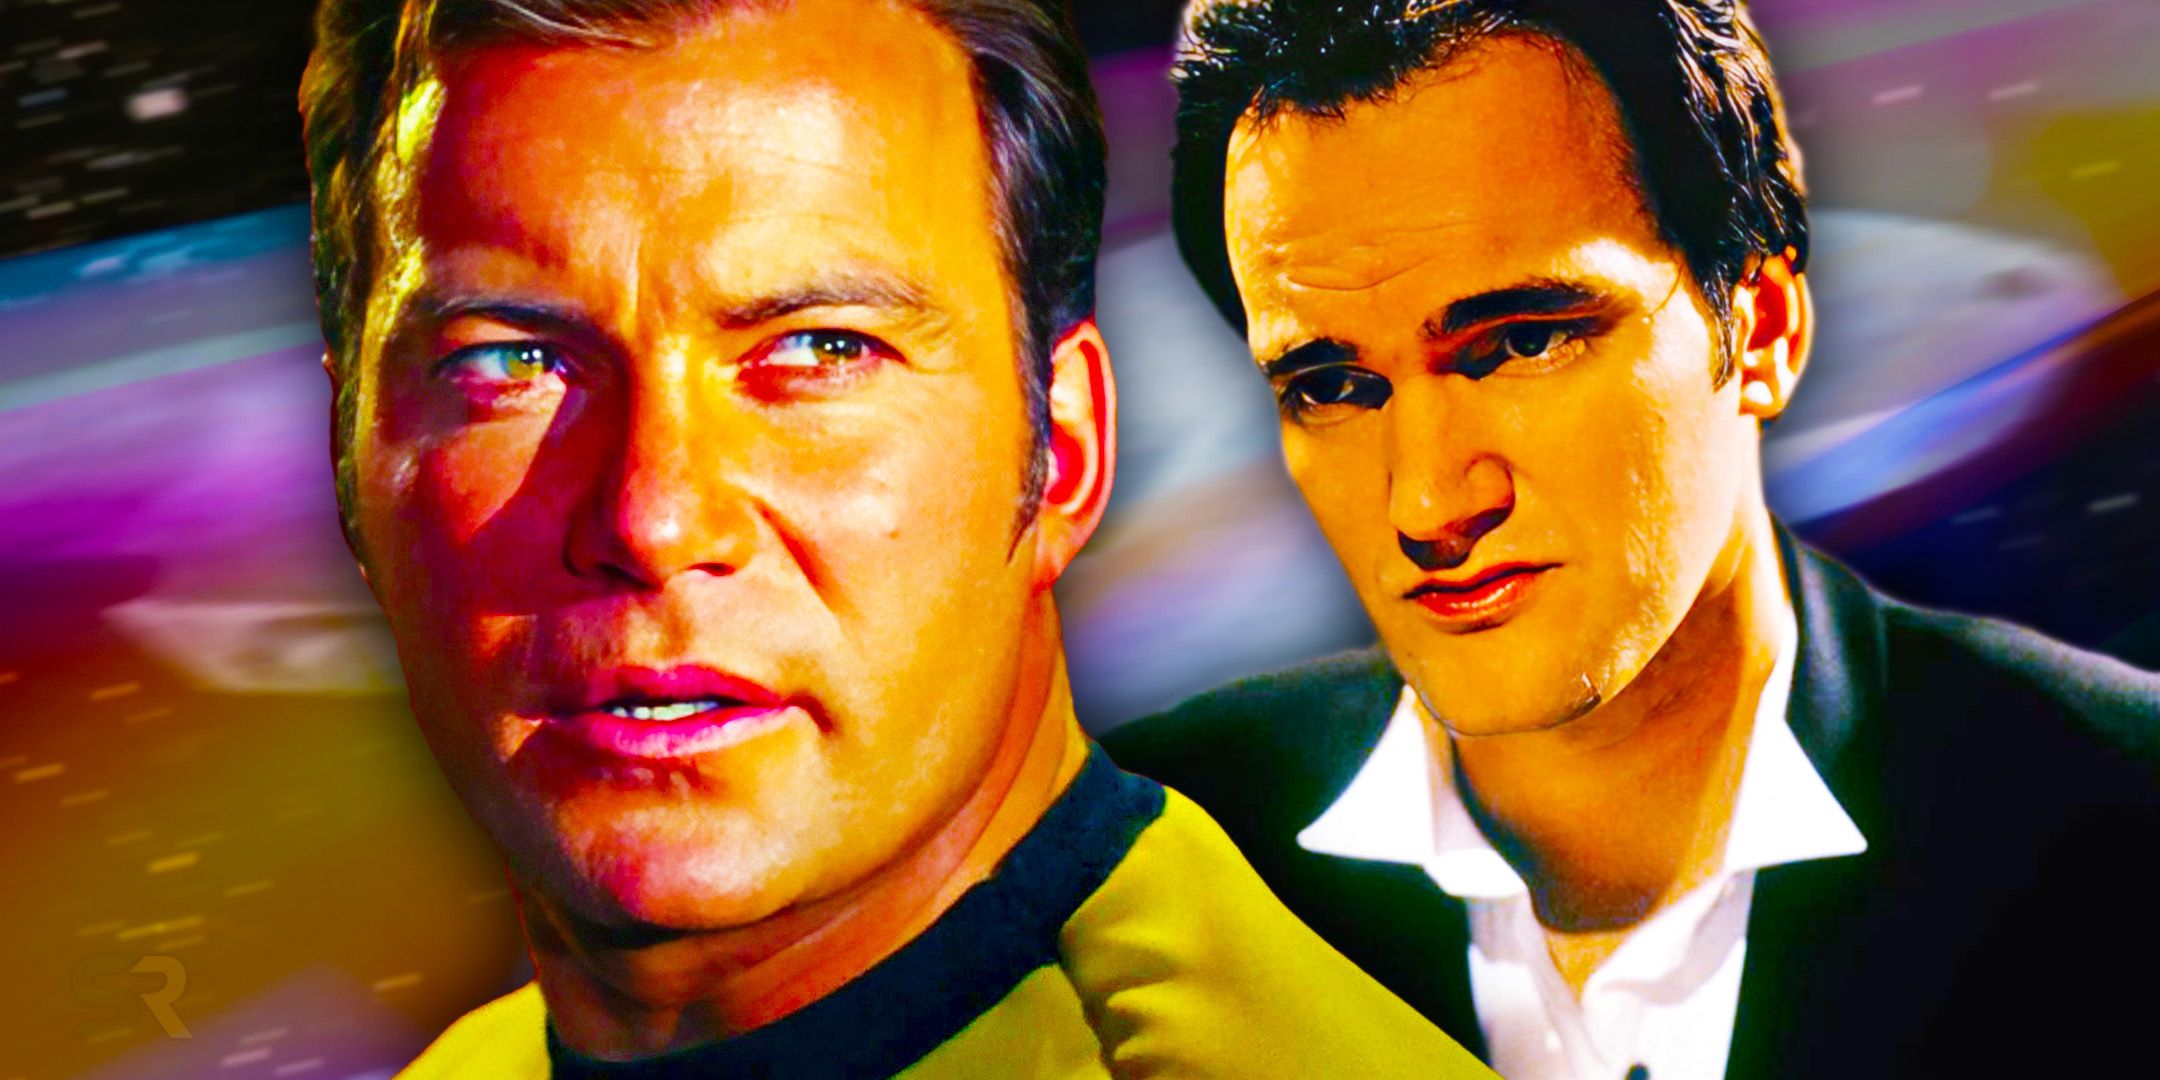 William Shatner as Star Trek's Captain Kirk and director Quentin Tarantino